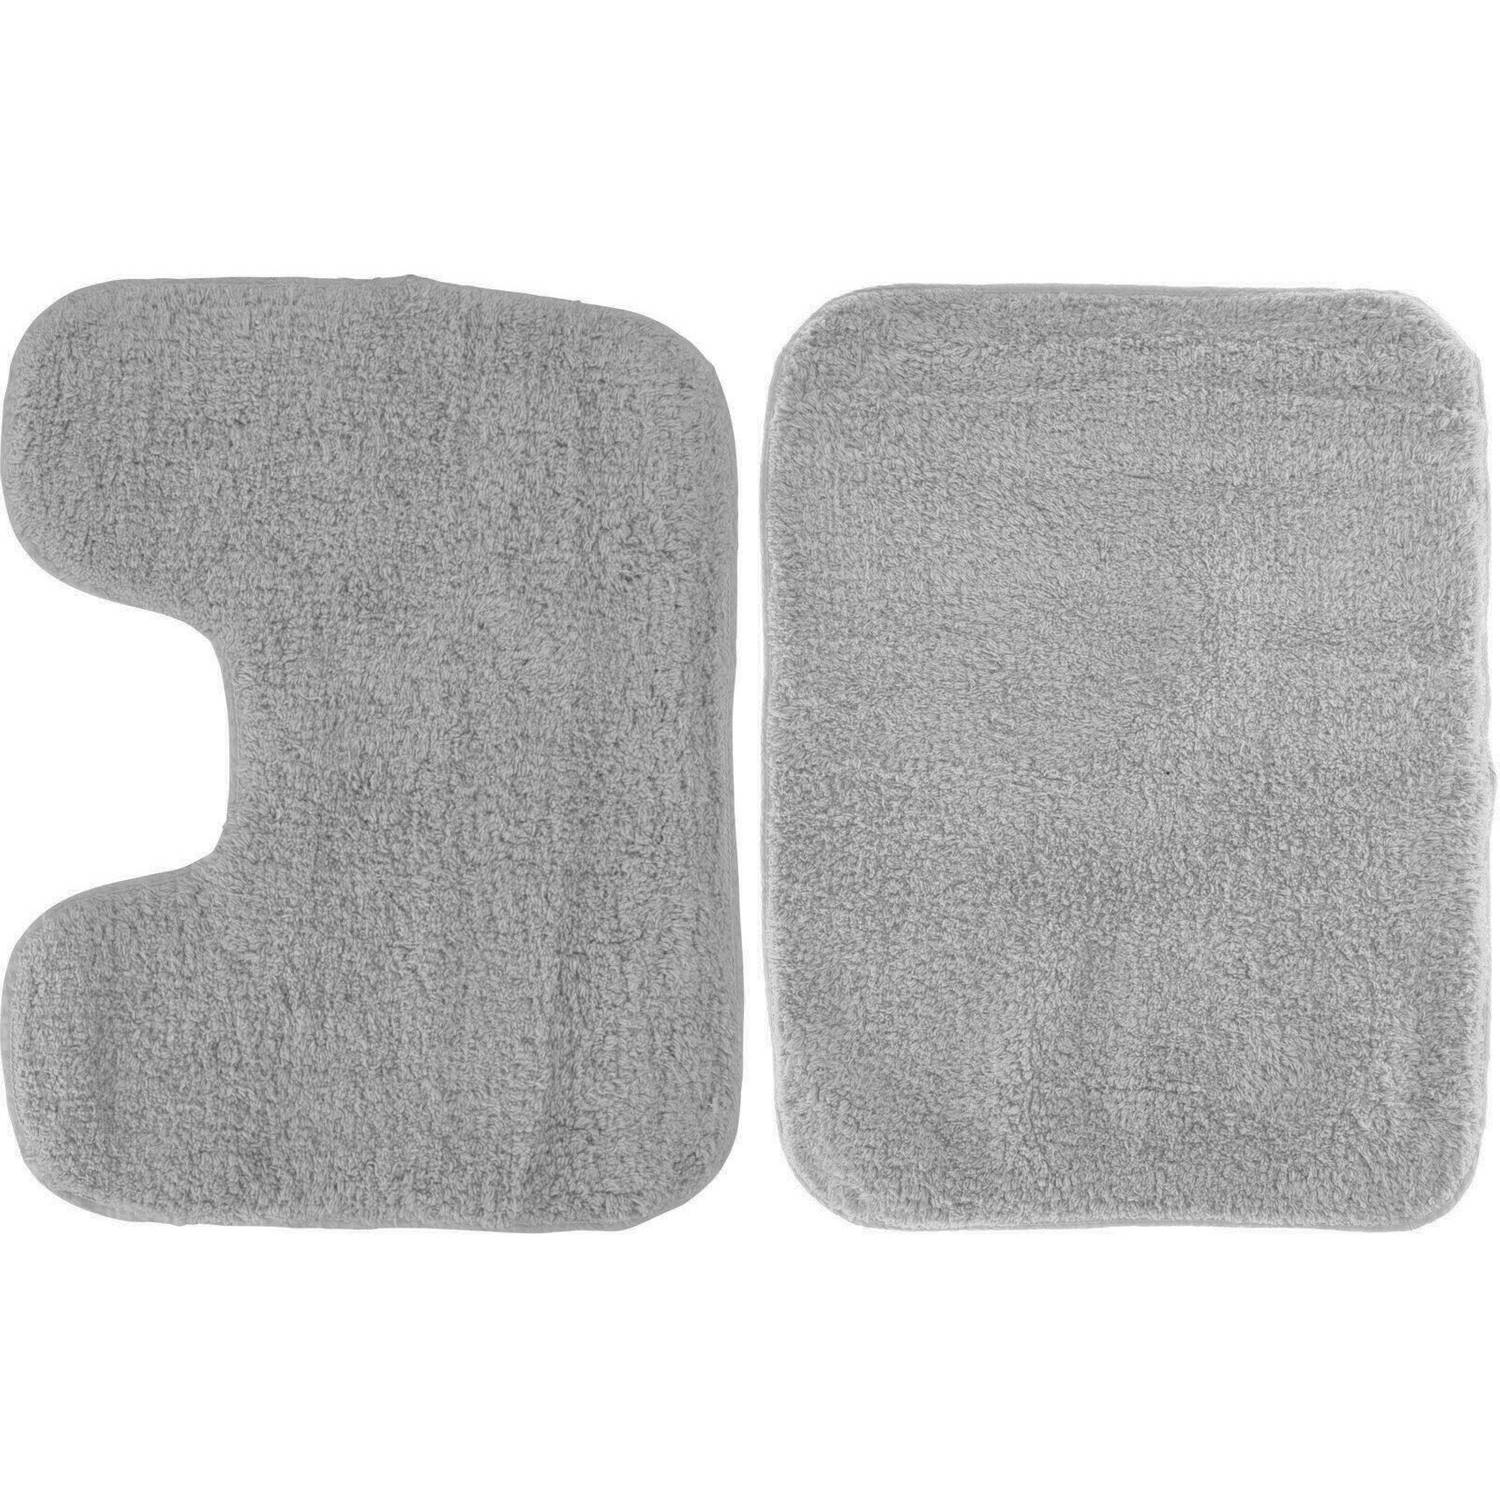 Badkamer/douche/toilet mat set beton grijs Badmatjes | Blokker